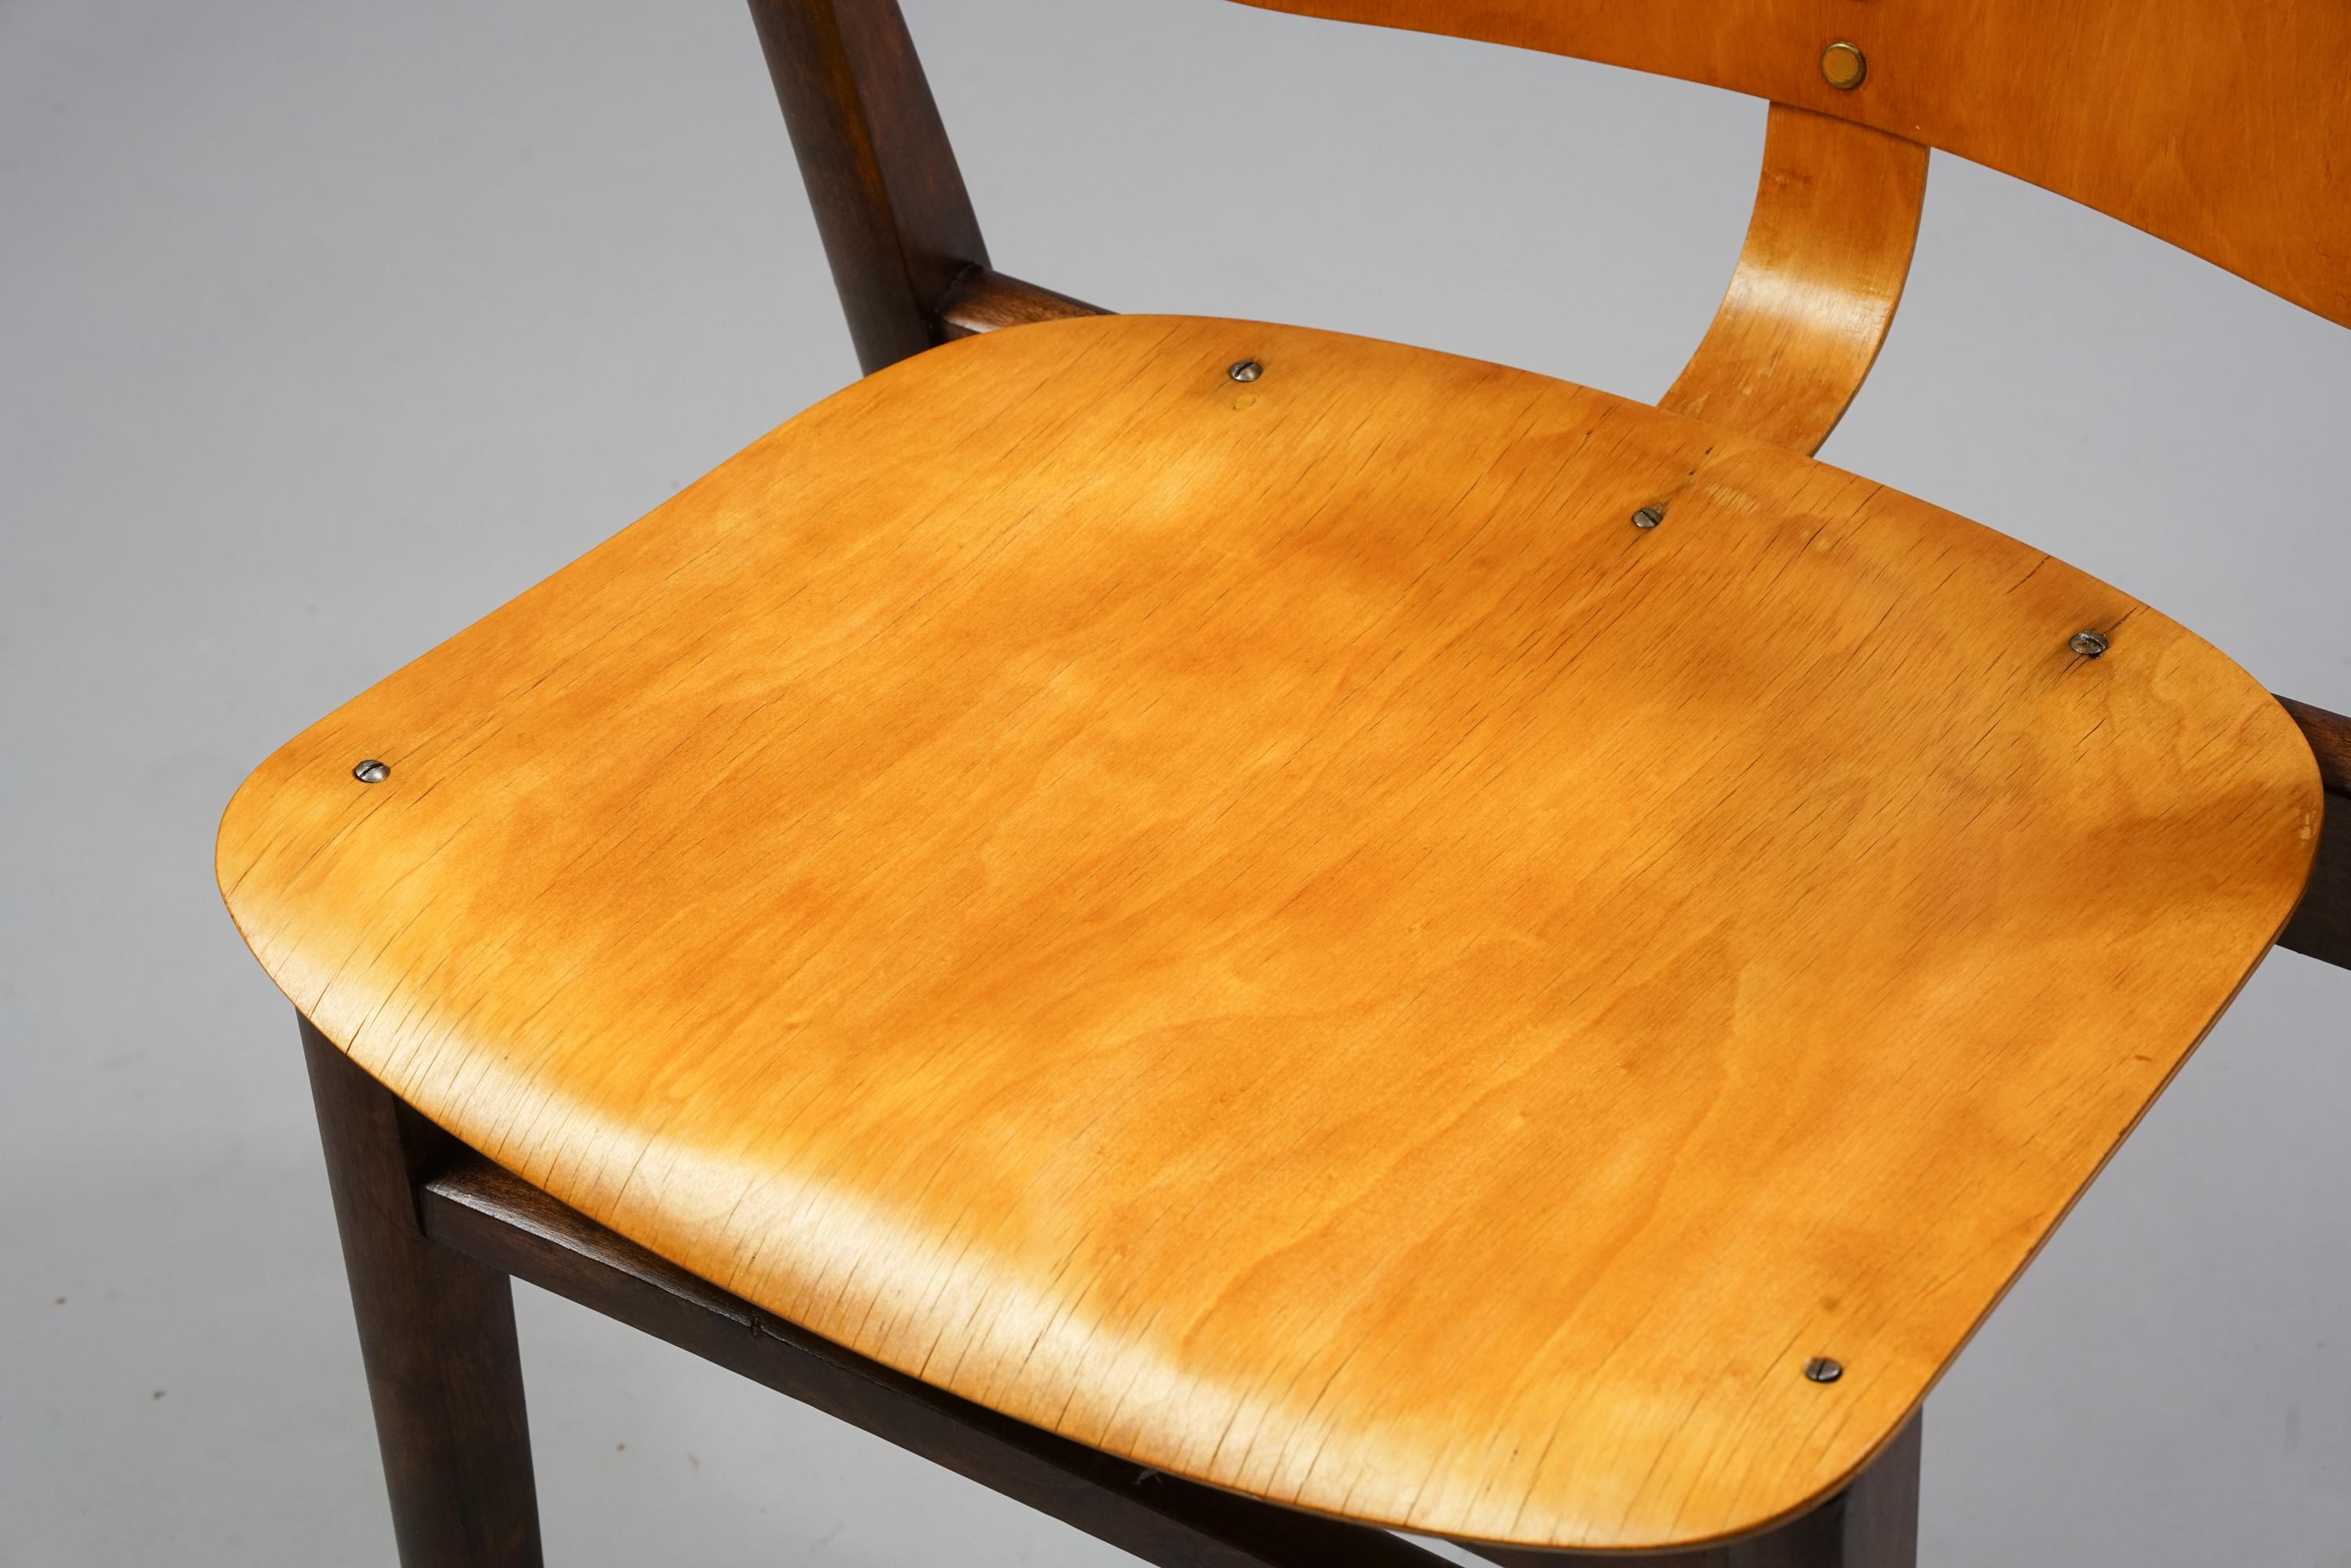 Finnish Model Domus Chair by Ilmari Tapiovaara from the 1950s